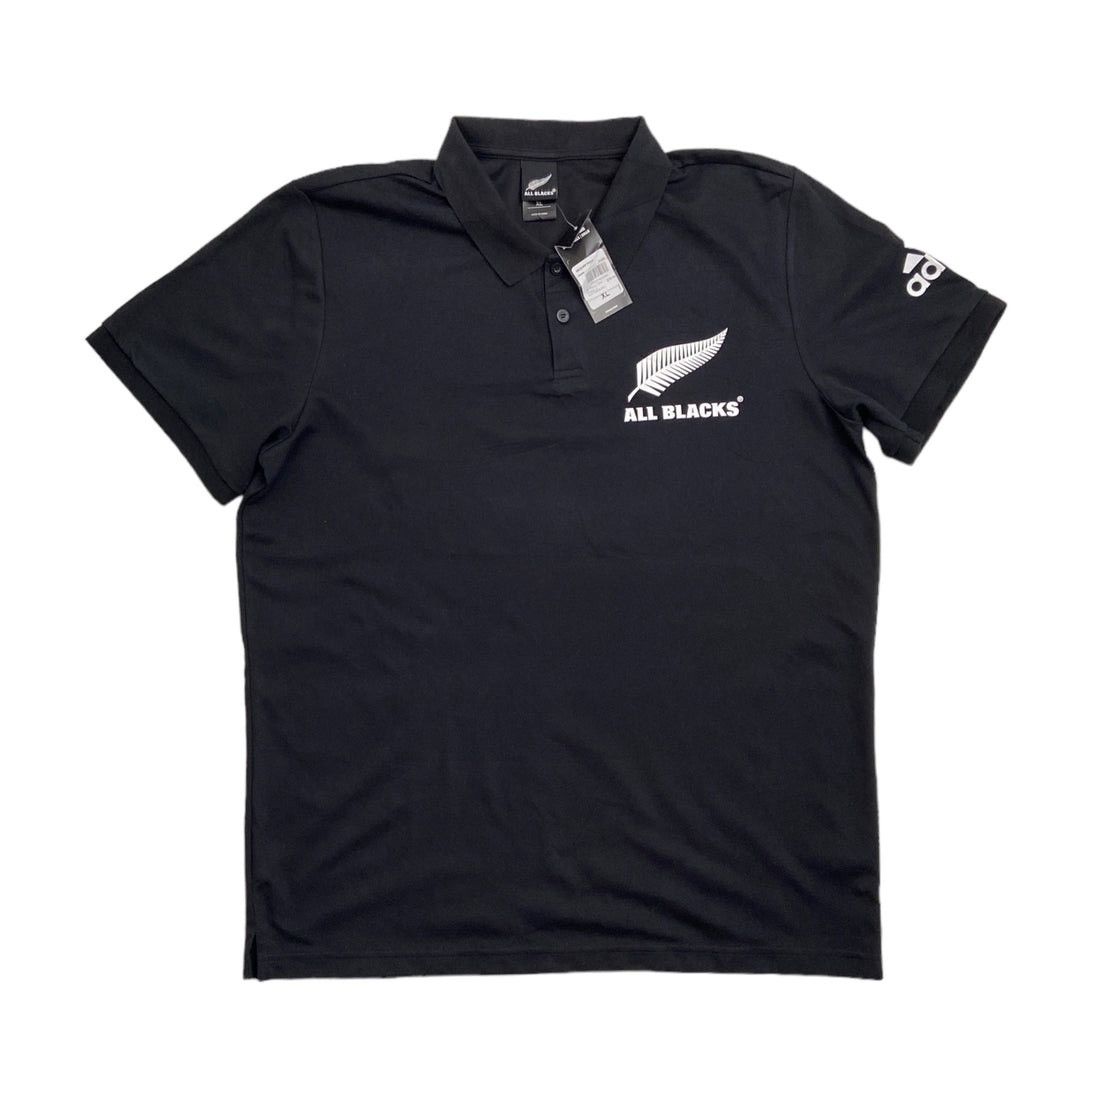 Adidas Adidas All Black Polo T Shirt Rugby Canterbury | Grailed